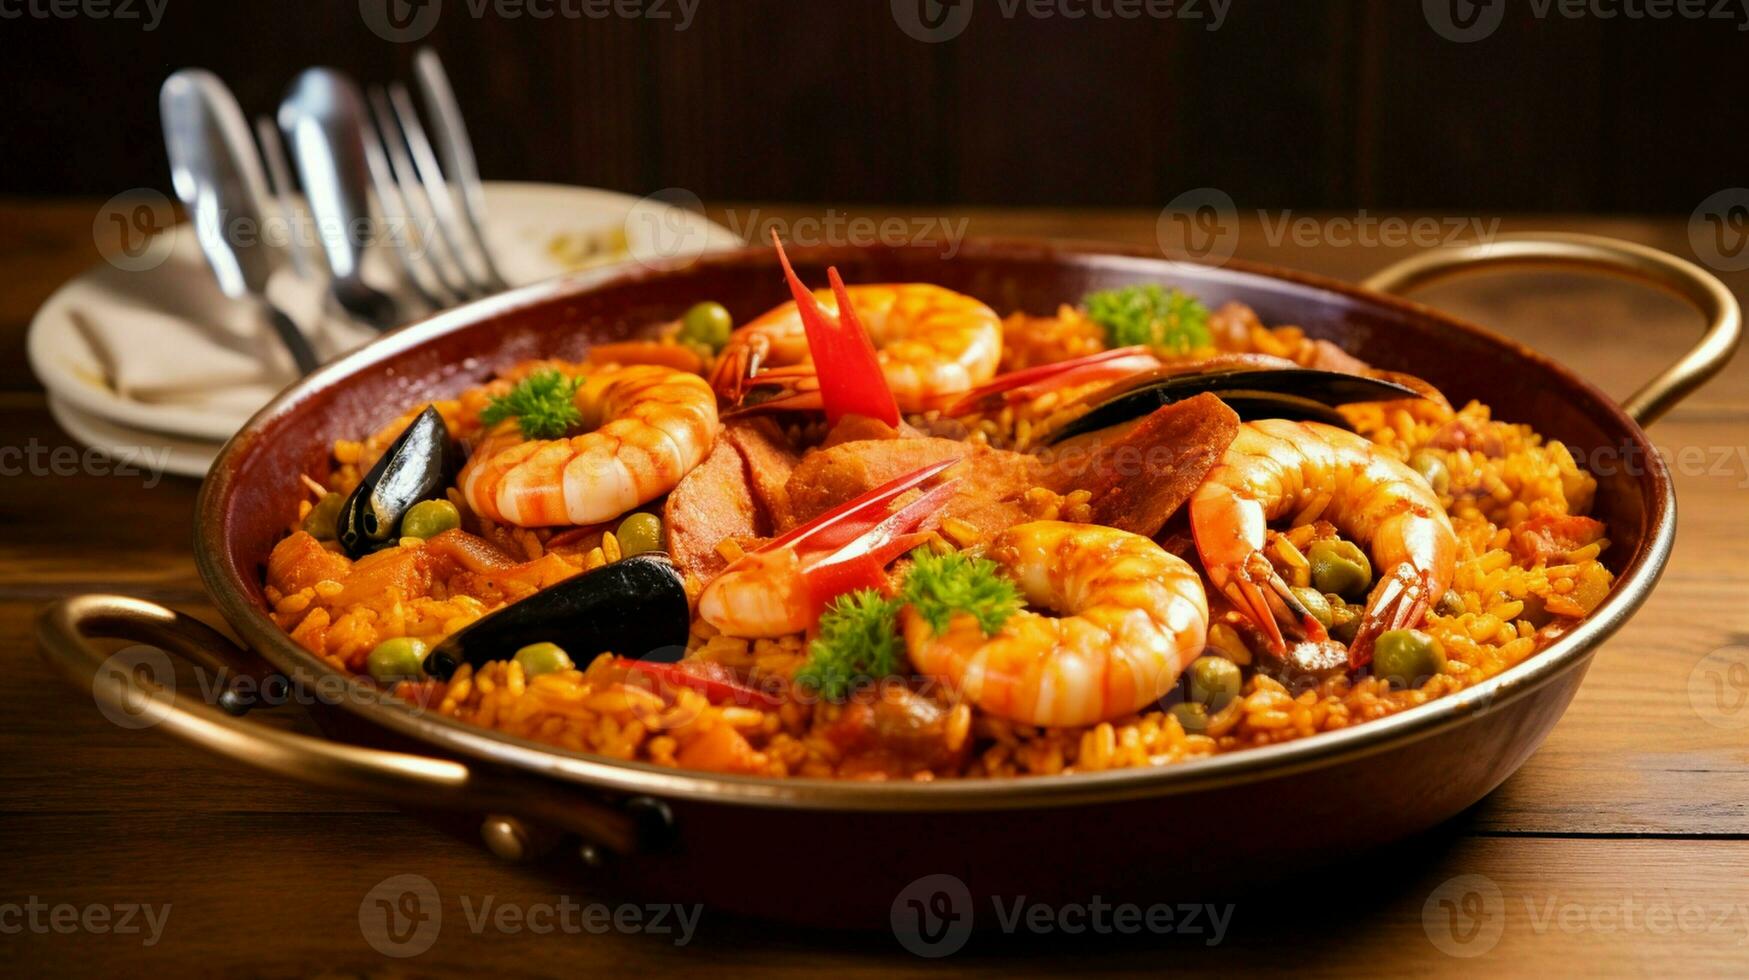 garnaal met rijst- - detailopname van garnaal met rijst- - traditioneel Spaans voedsel paëlla. foto